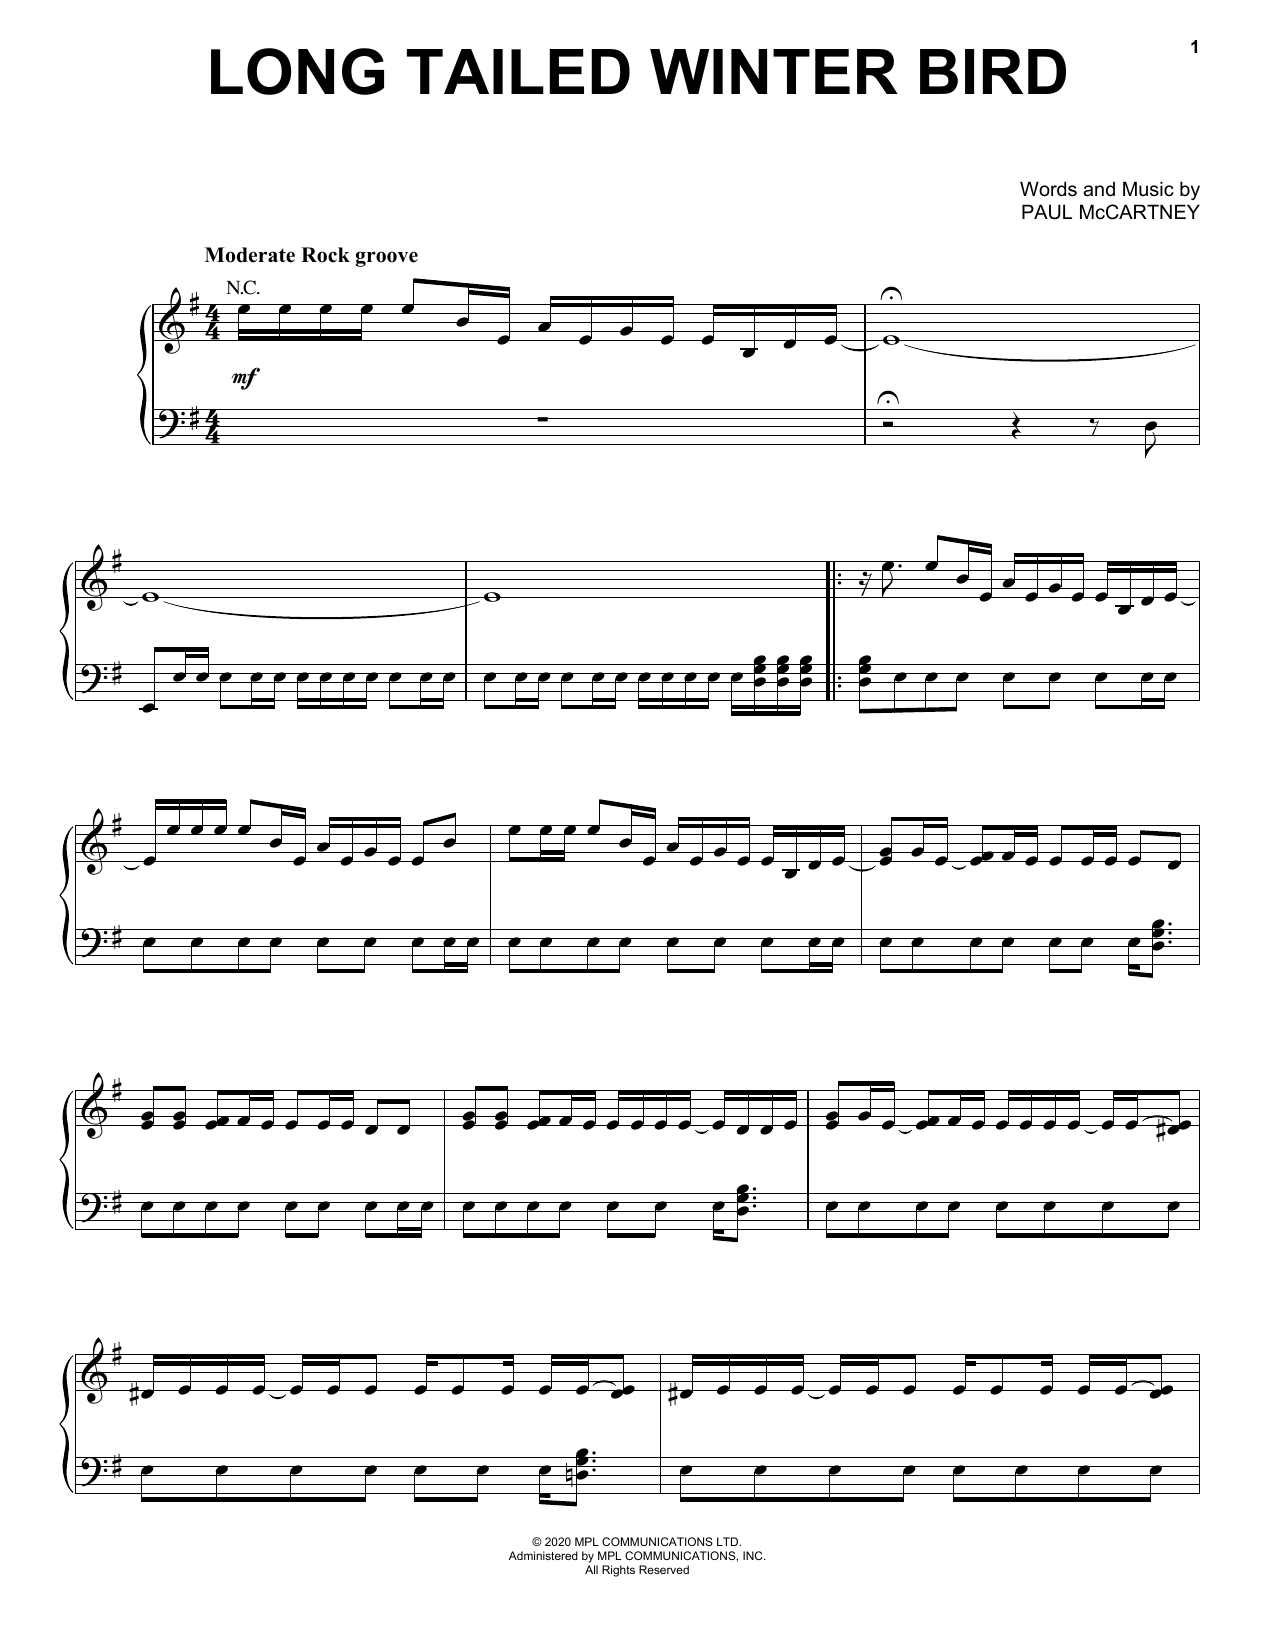 Paul McCartney Long Tailed Winter Bird Sheet Music Notes & Chords for Lead Sheet / Fake Book - Download or Print PDF